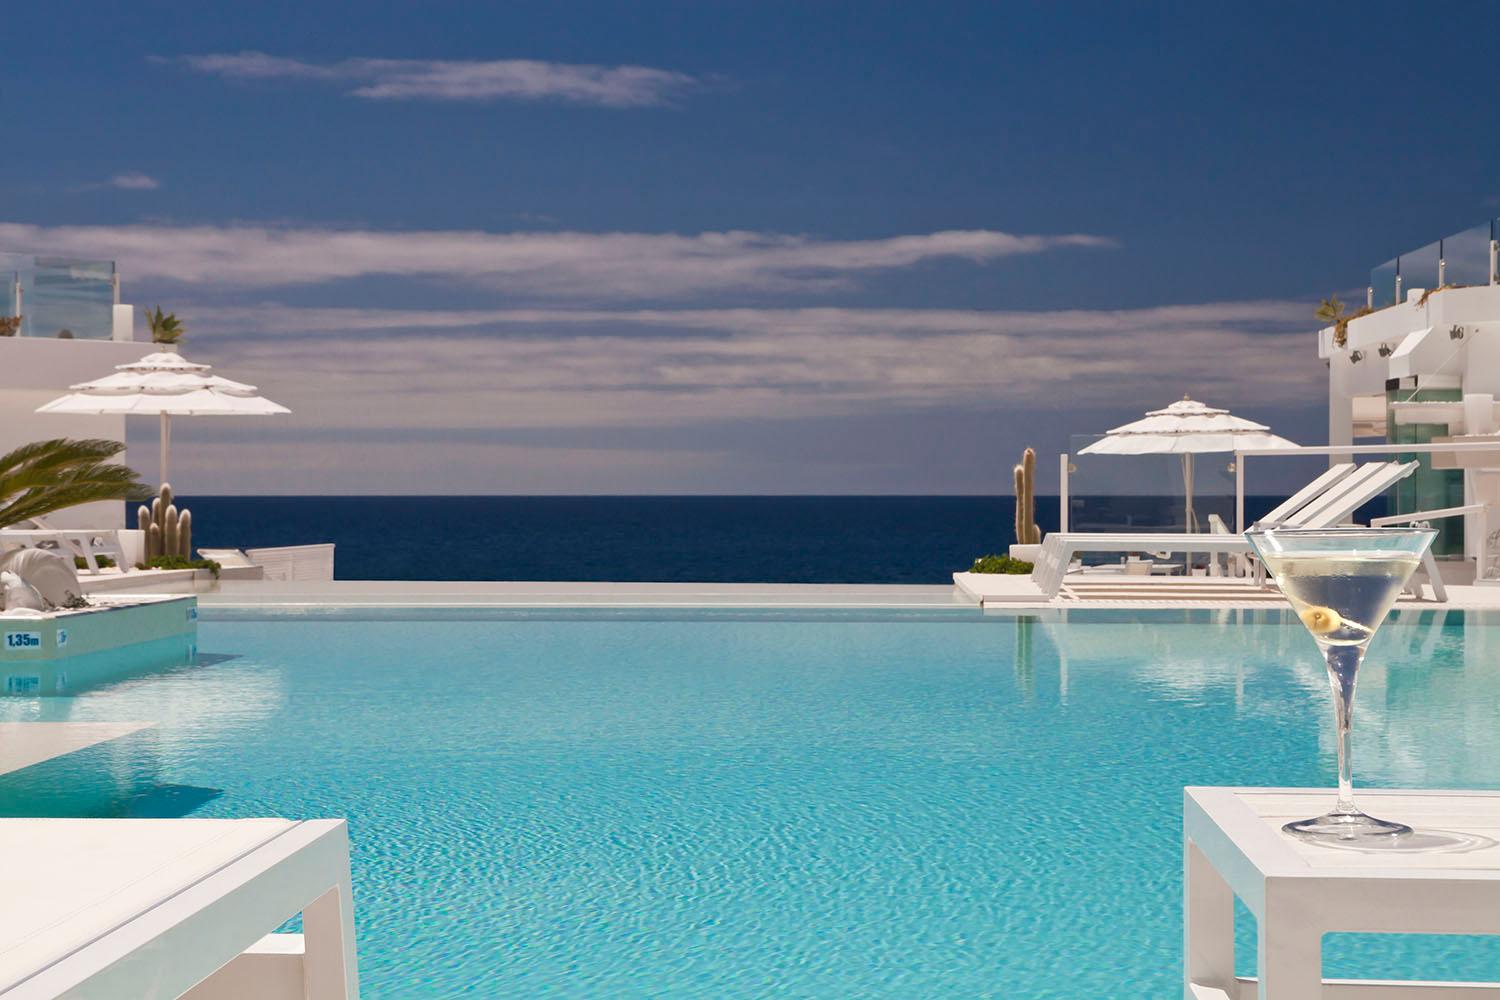 Lani's Suites Deluxe in Puerto Del Carmen Spain - best hotels for service